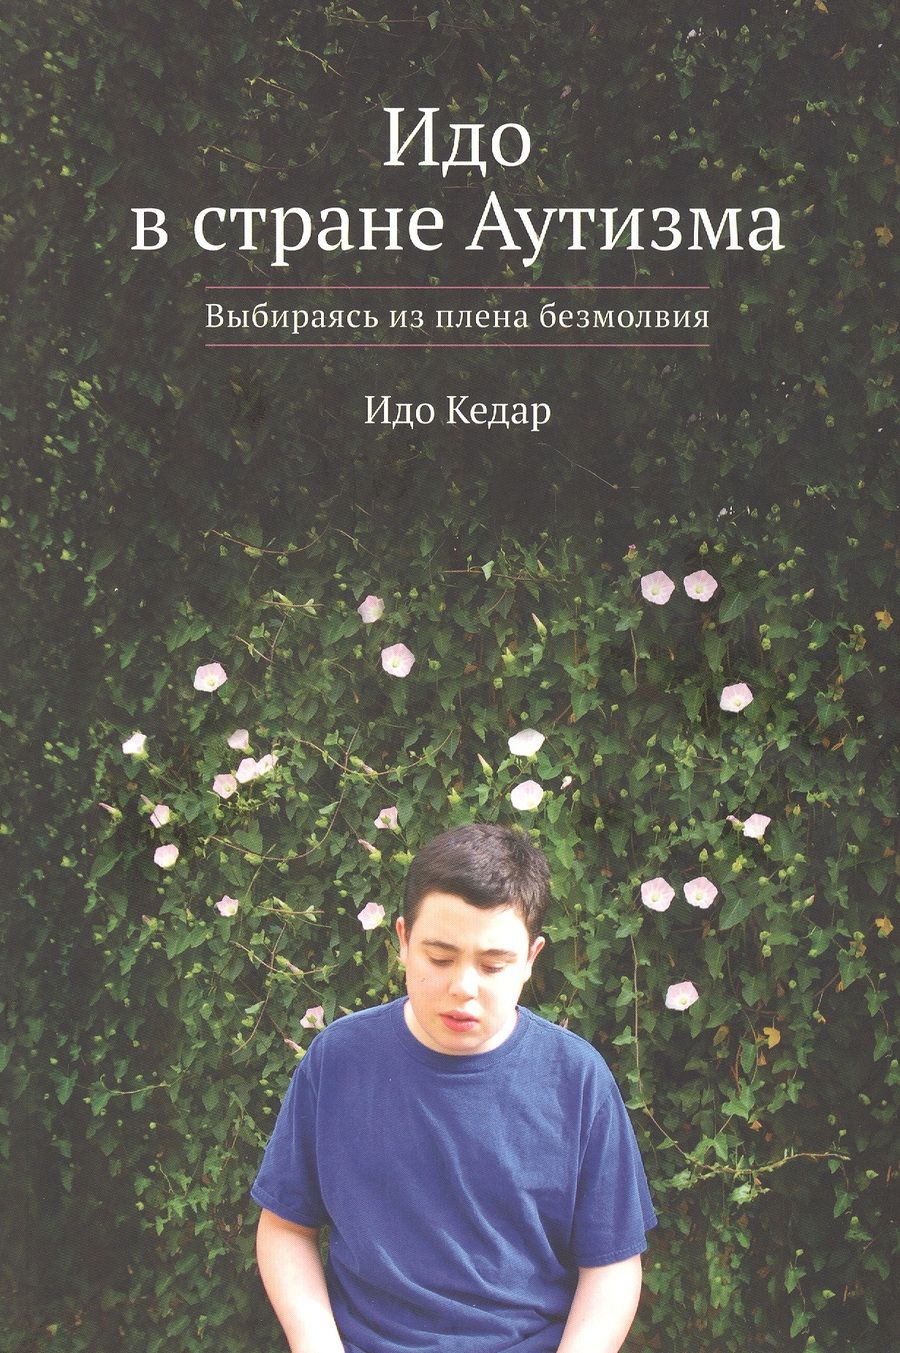 Обложка книги "Кедар: Идо в стране Аутизма. Выбираясь из плена безмолвия"